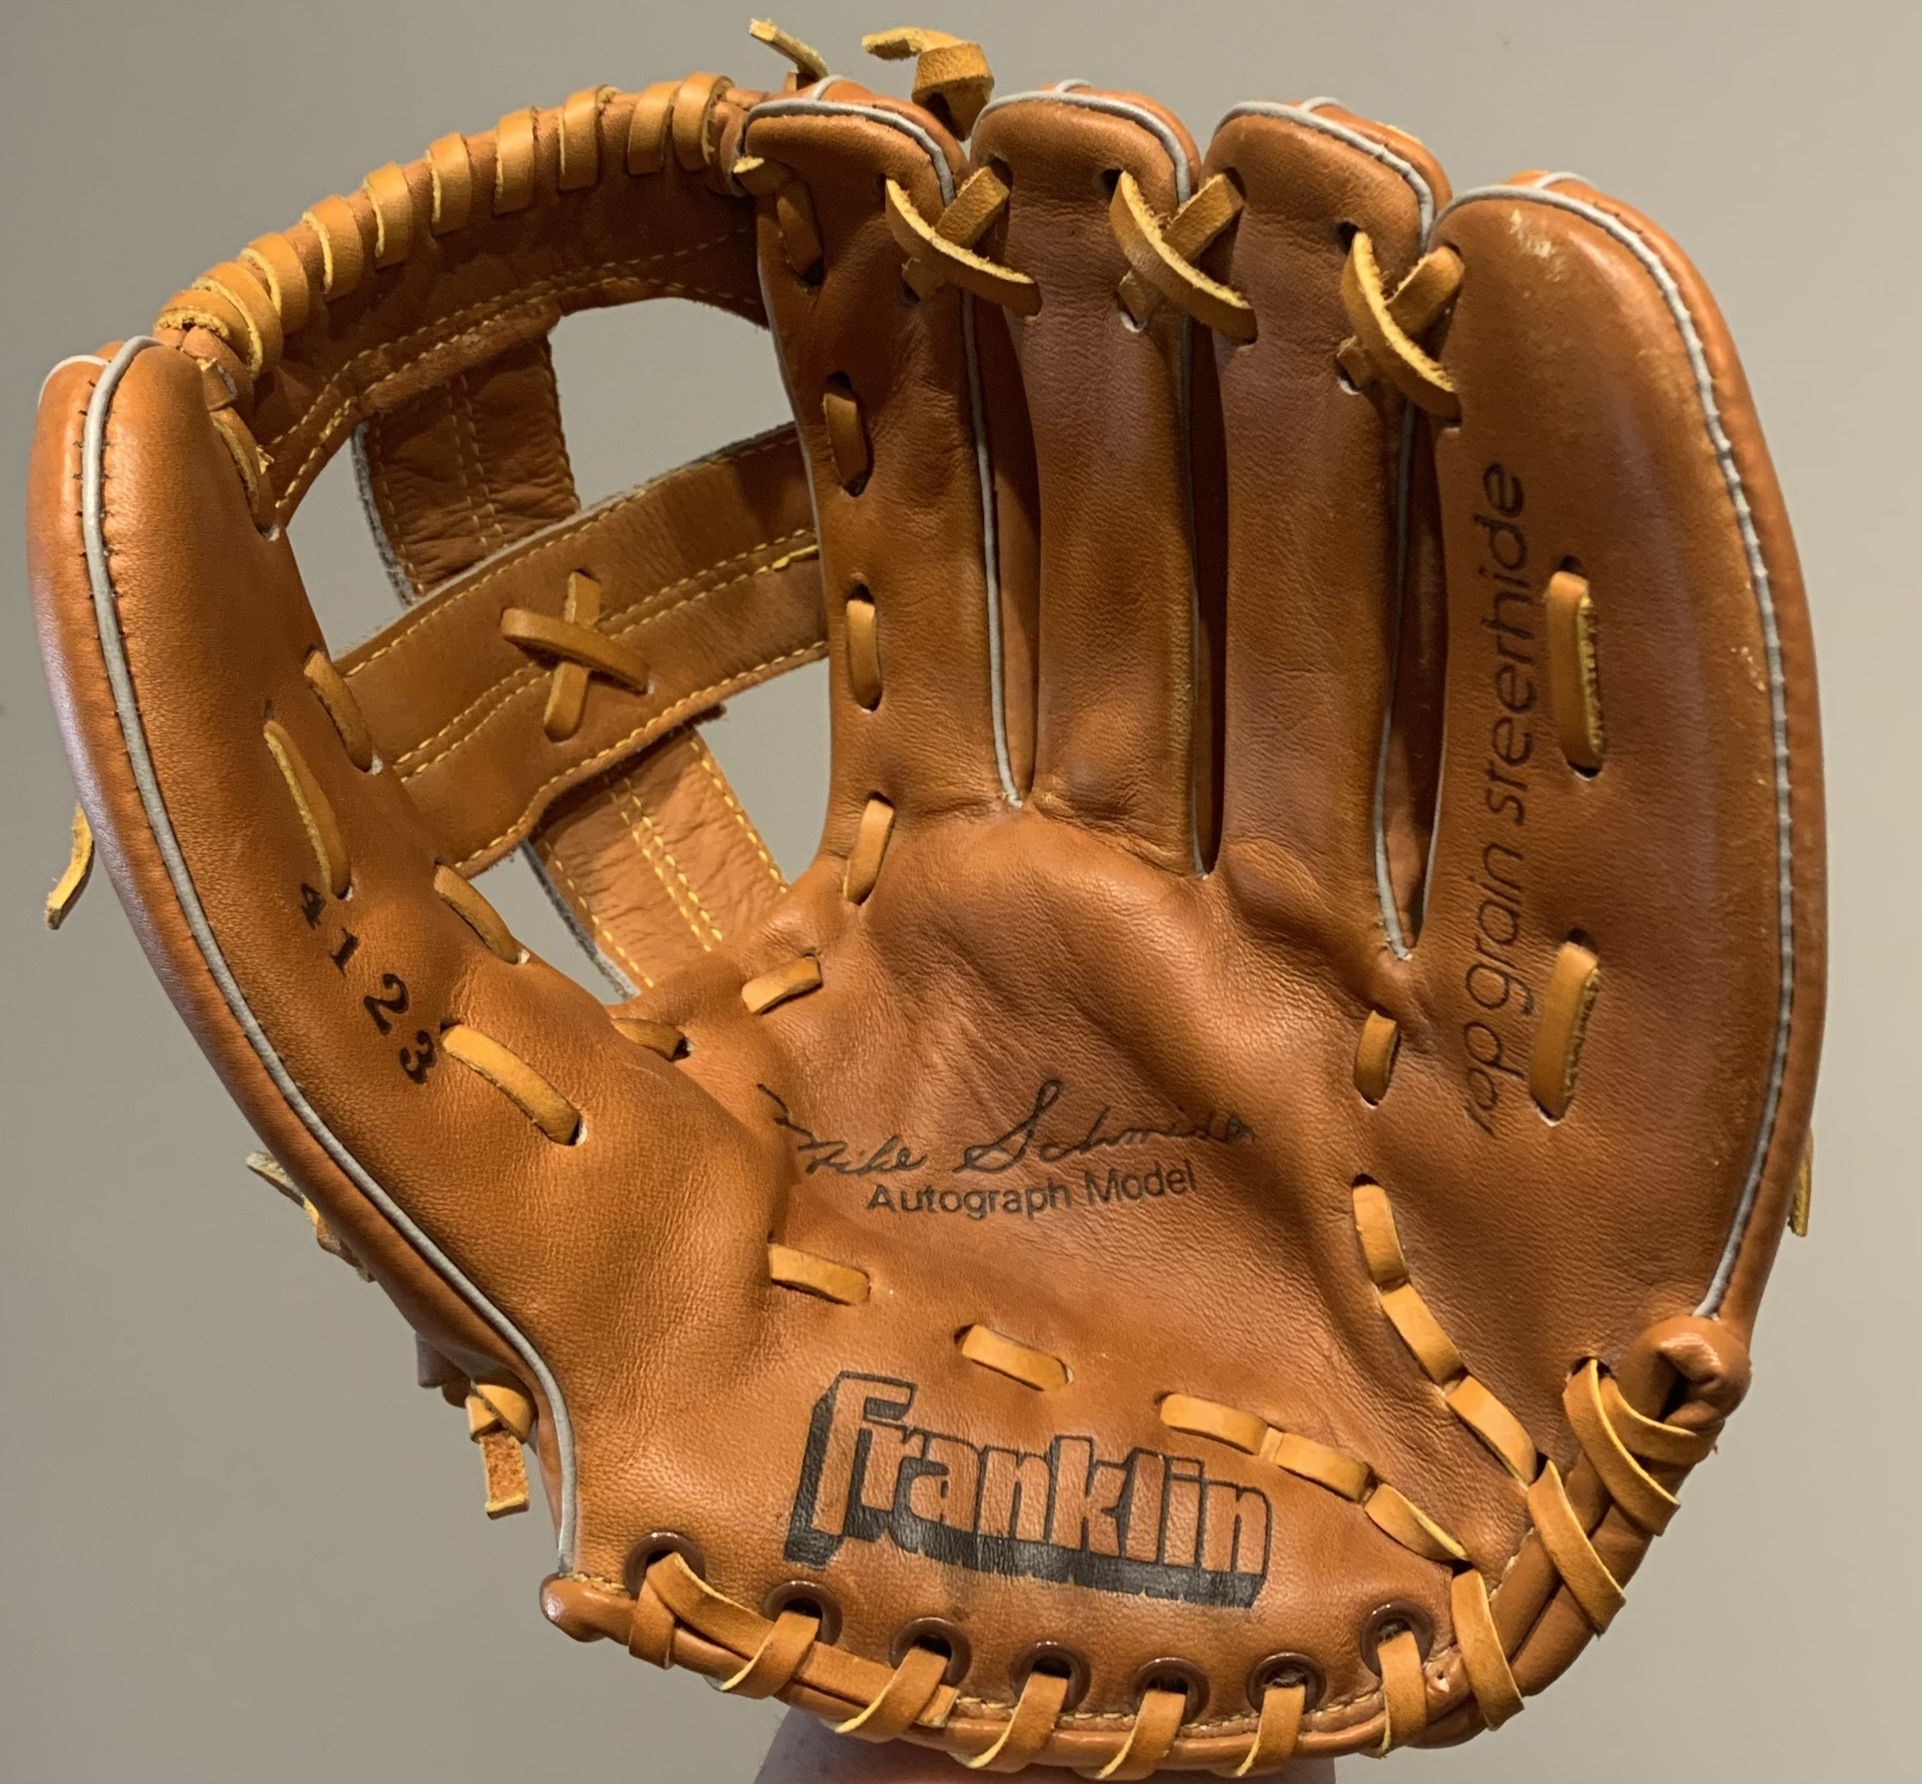 Franklin Baseball Glove RHT 4123 Mike Schmidt Autograph Model 9" Top Grain